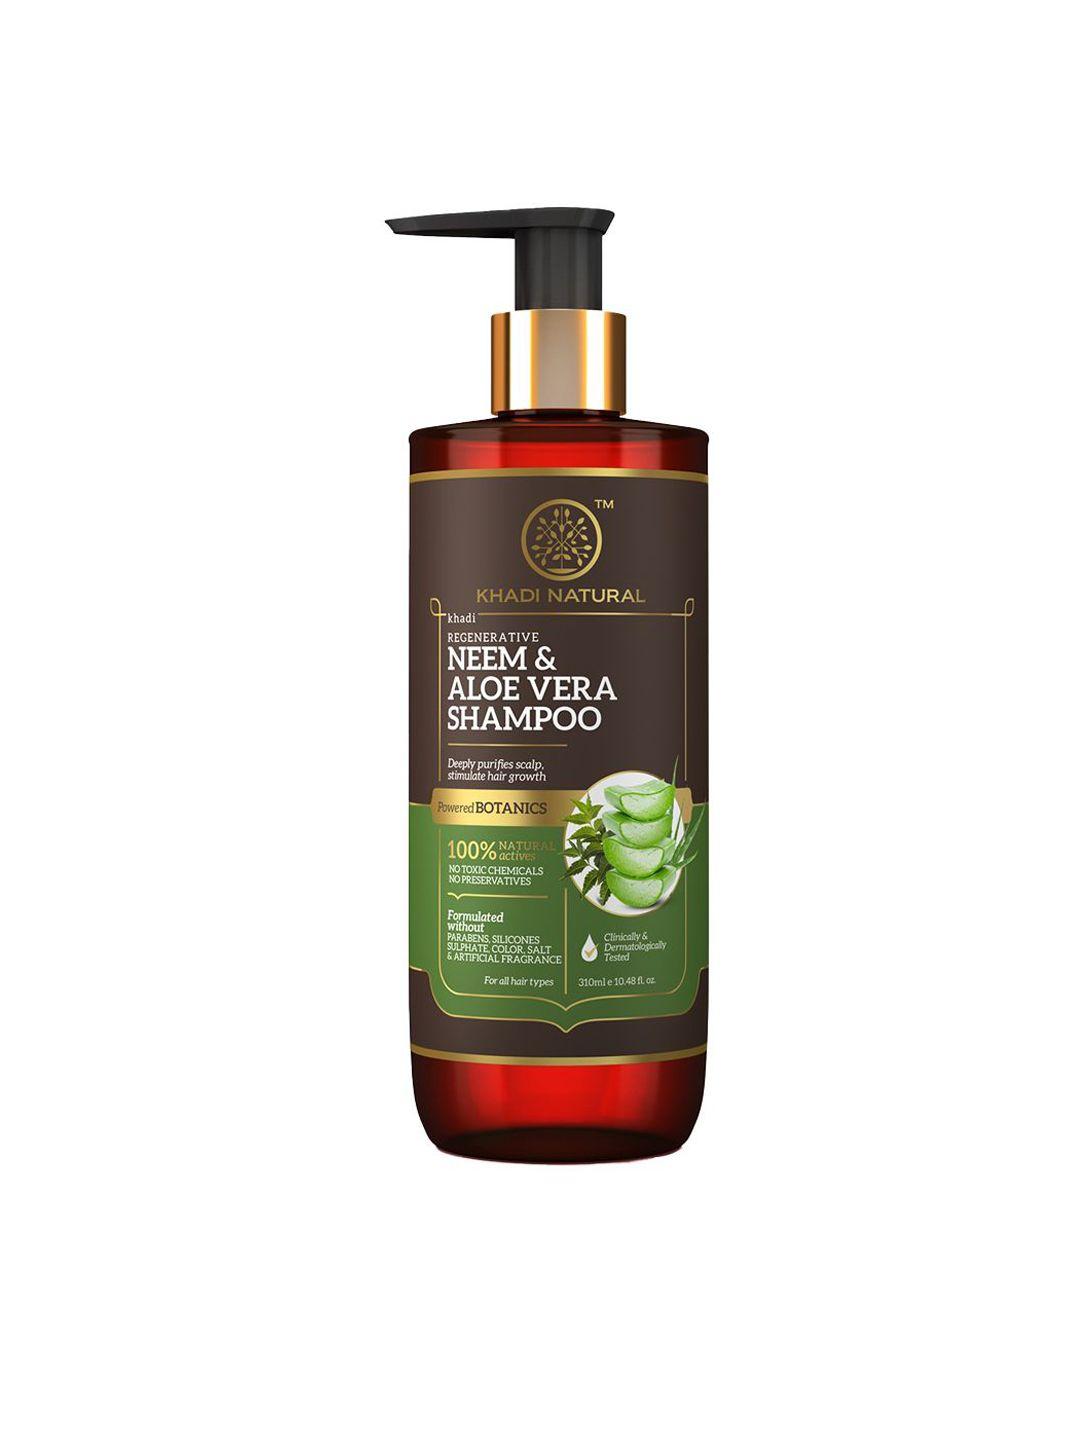 khadi natural regenerative neem & aloe vera powered botanics hair cleanser 310 ml